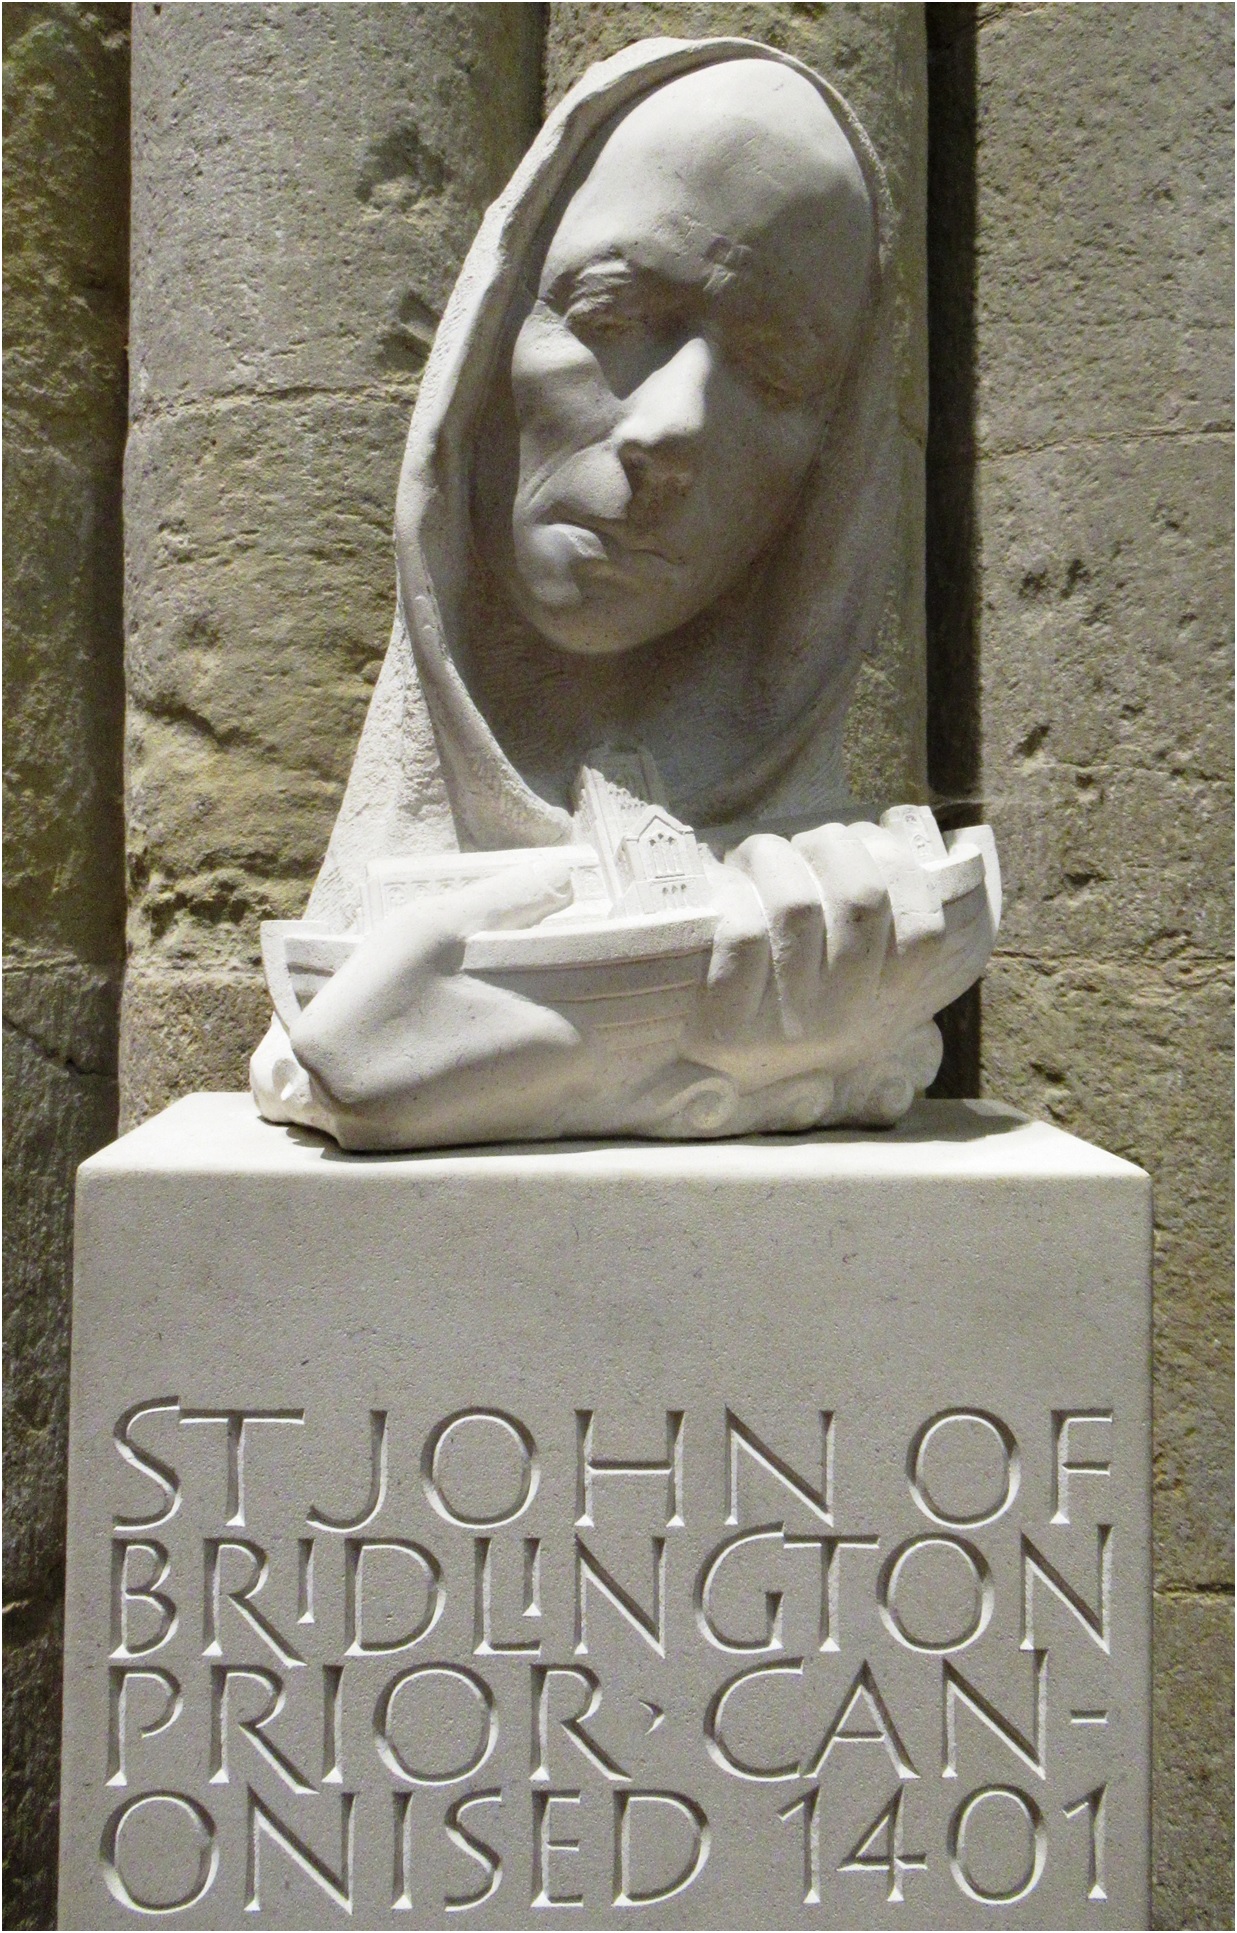 Saint John of Bridlington 1